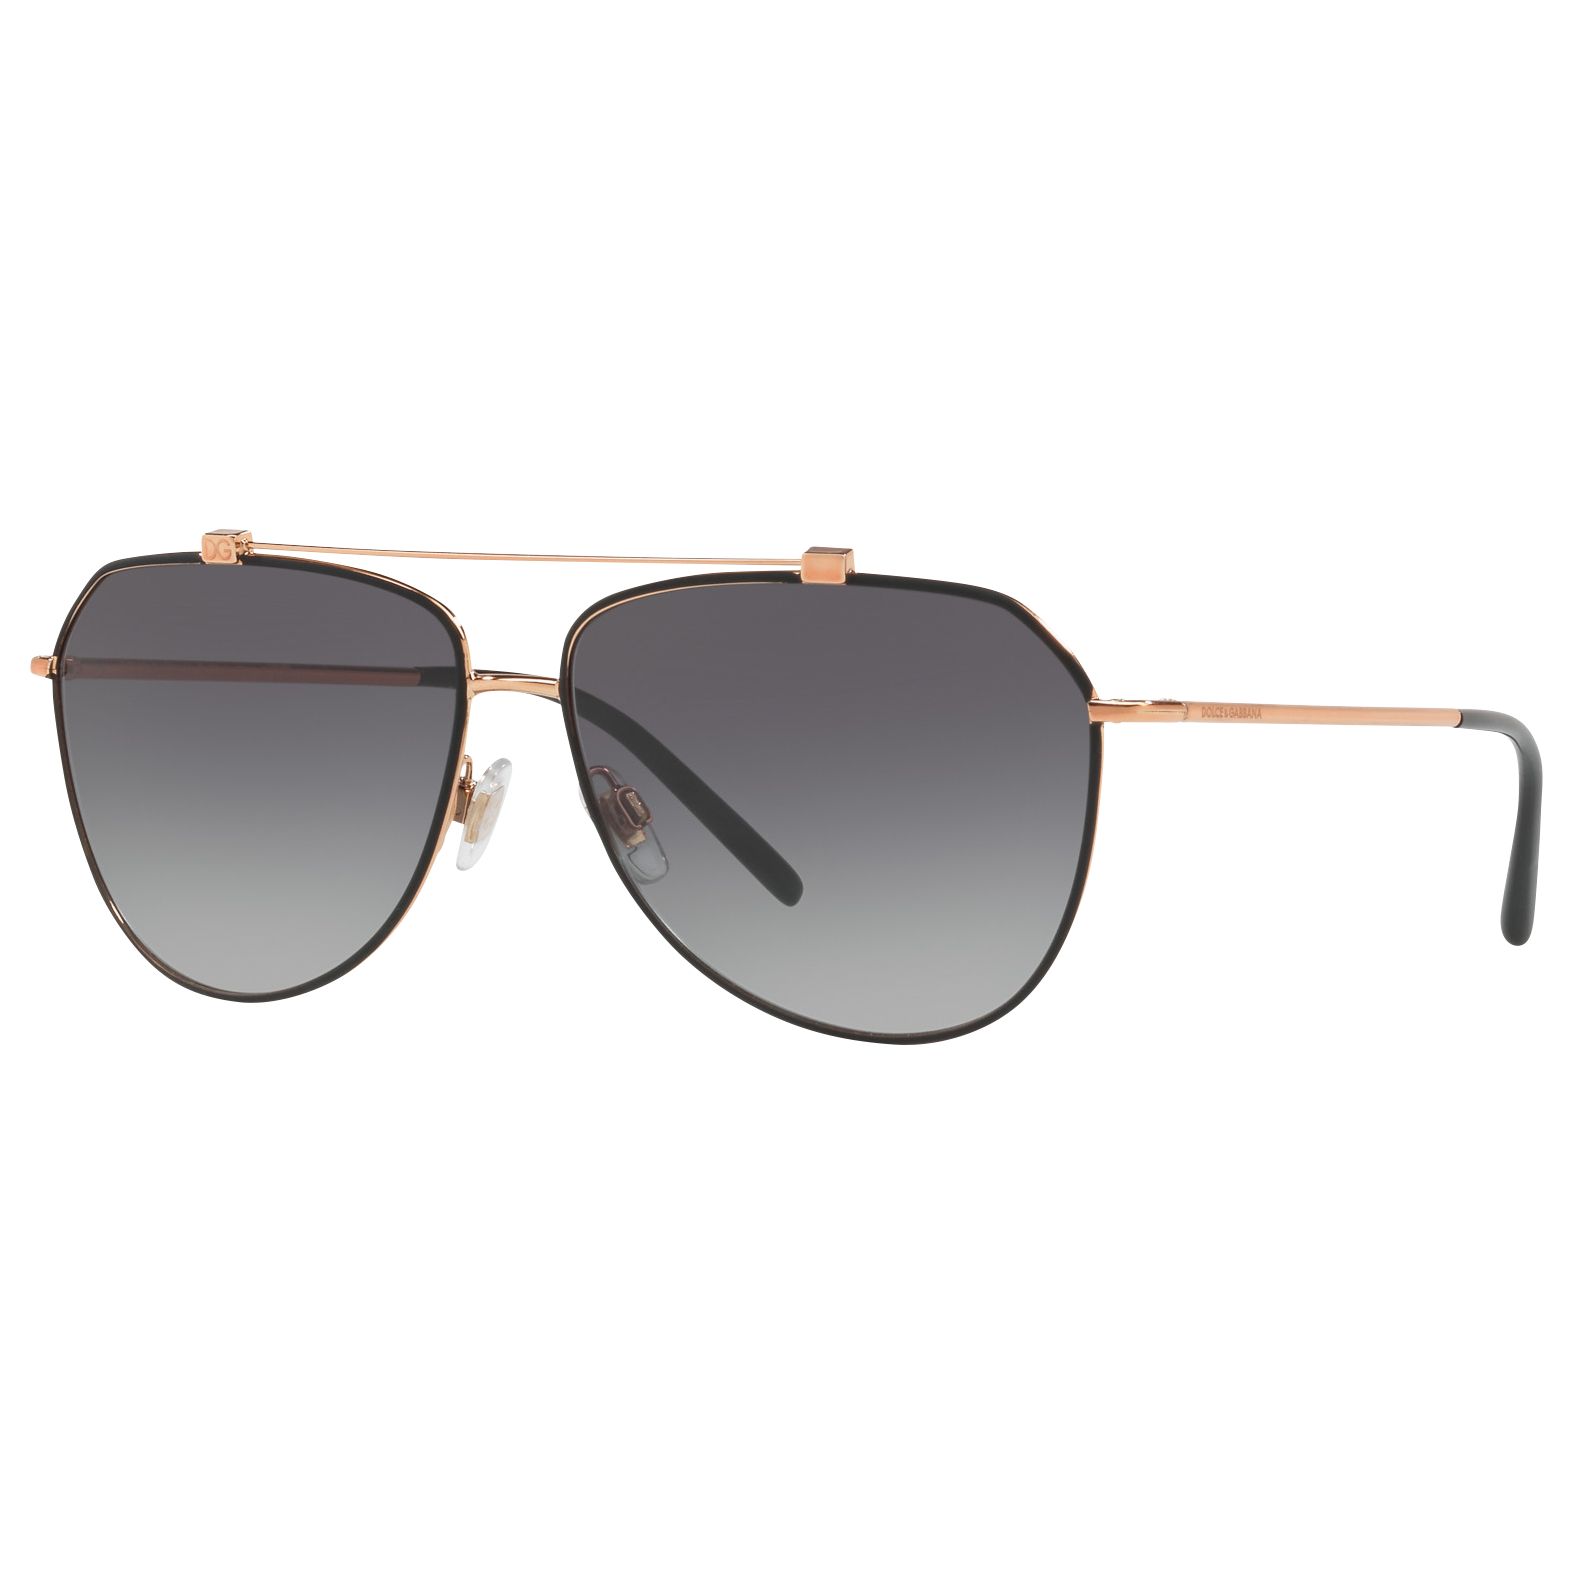 Dolce & Gabbana DG2190 Aviator Sunglasses, Gry Grd